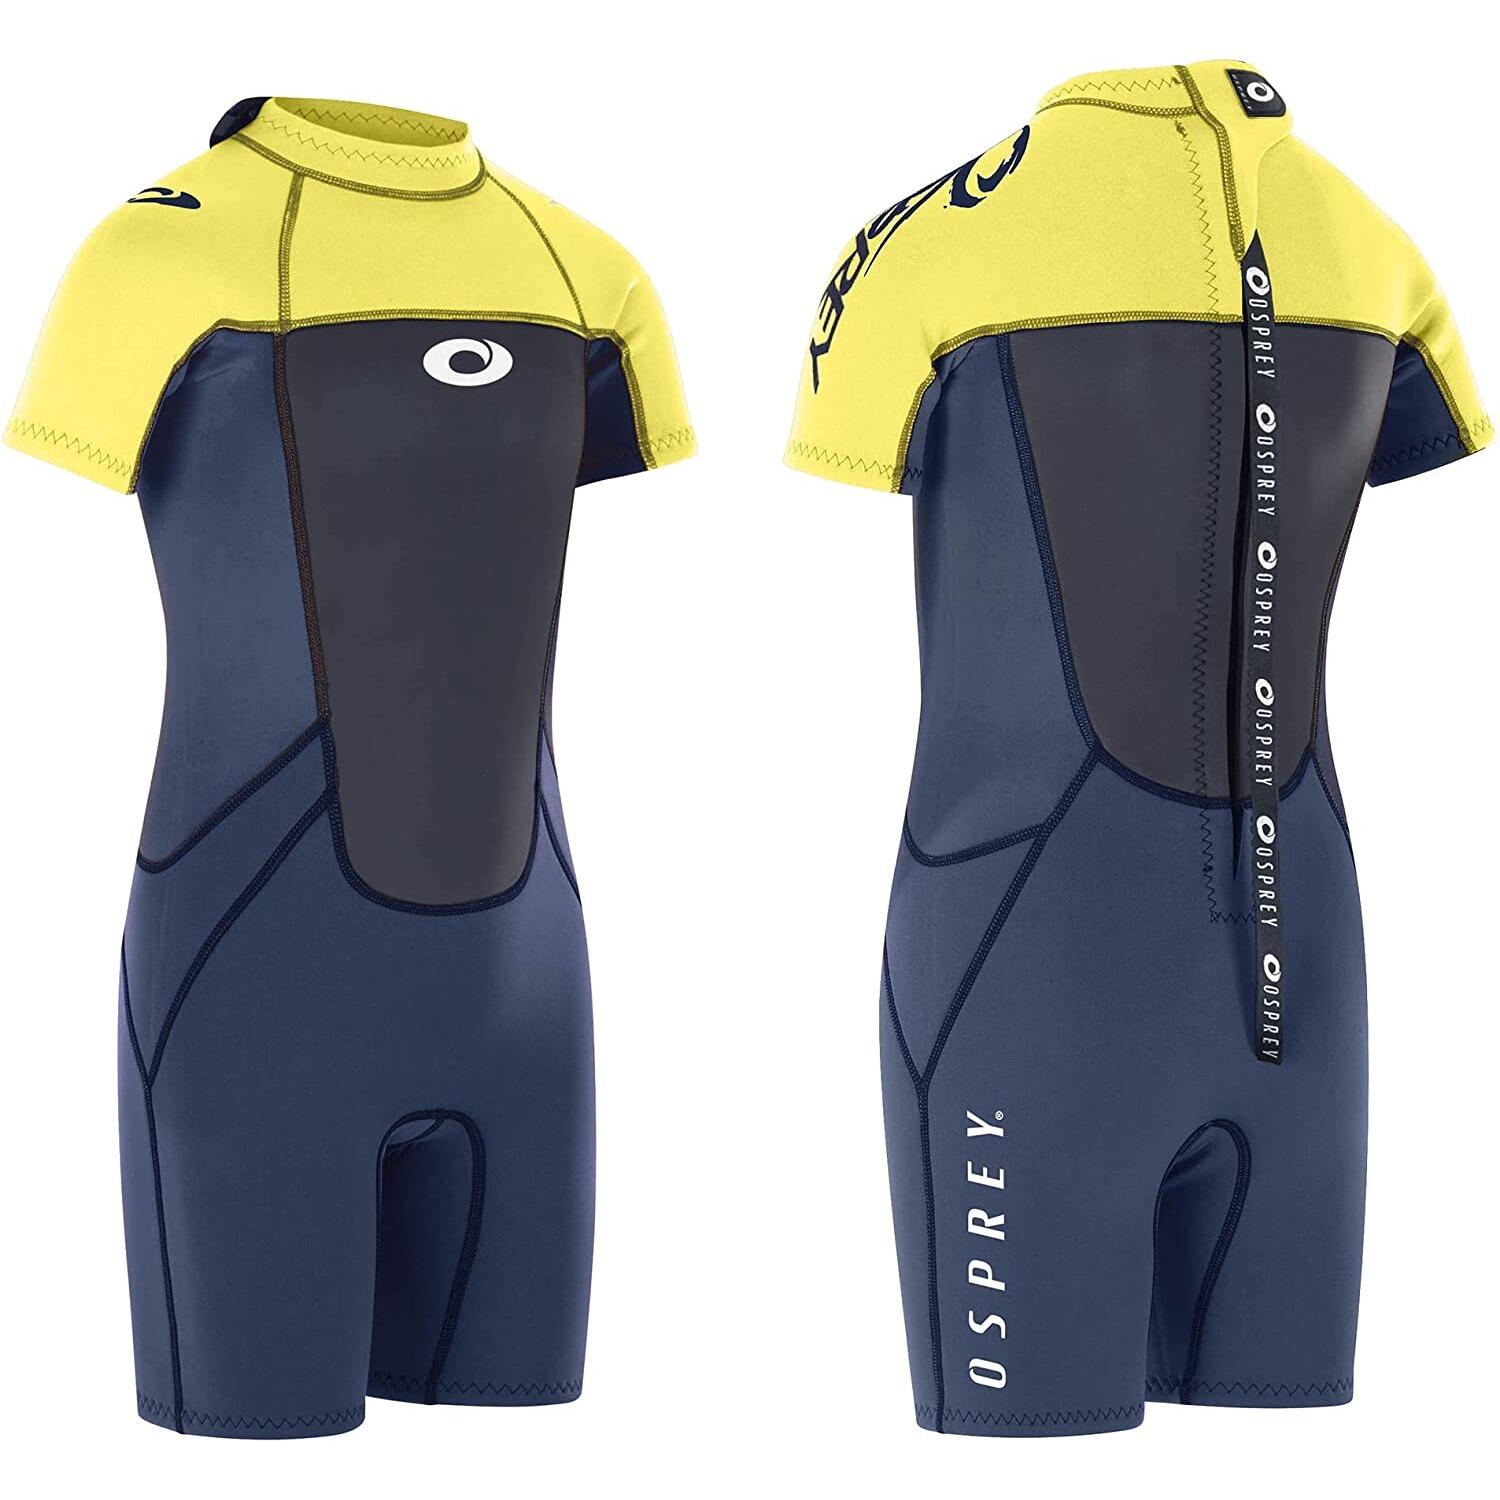 Osprey Origin Kids Neon Yellow Wetsuit - Size M 1/6